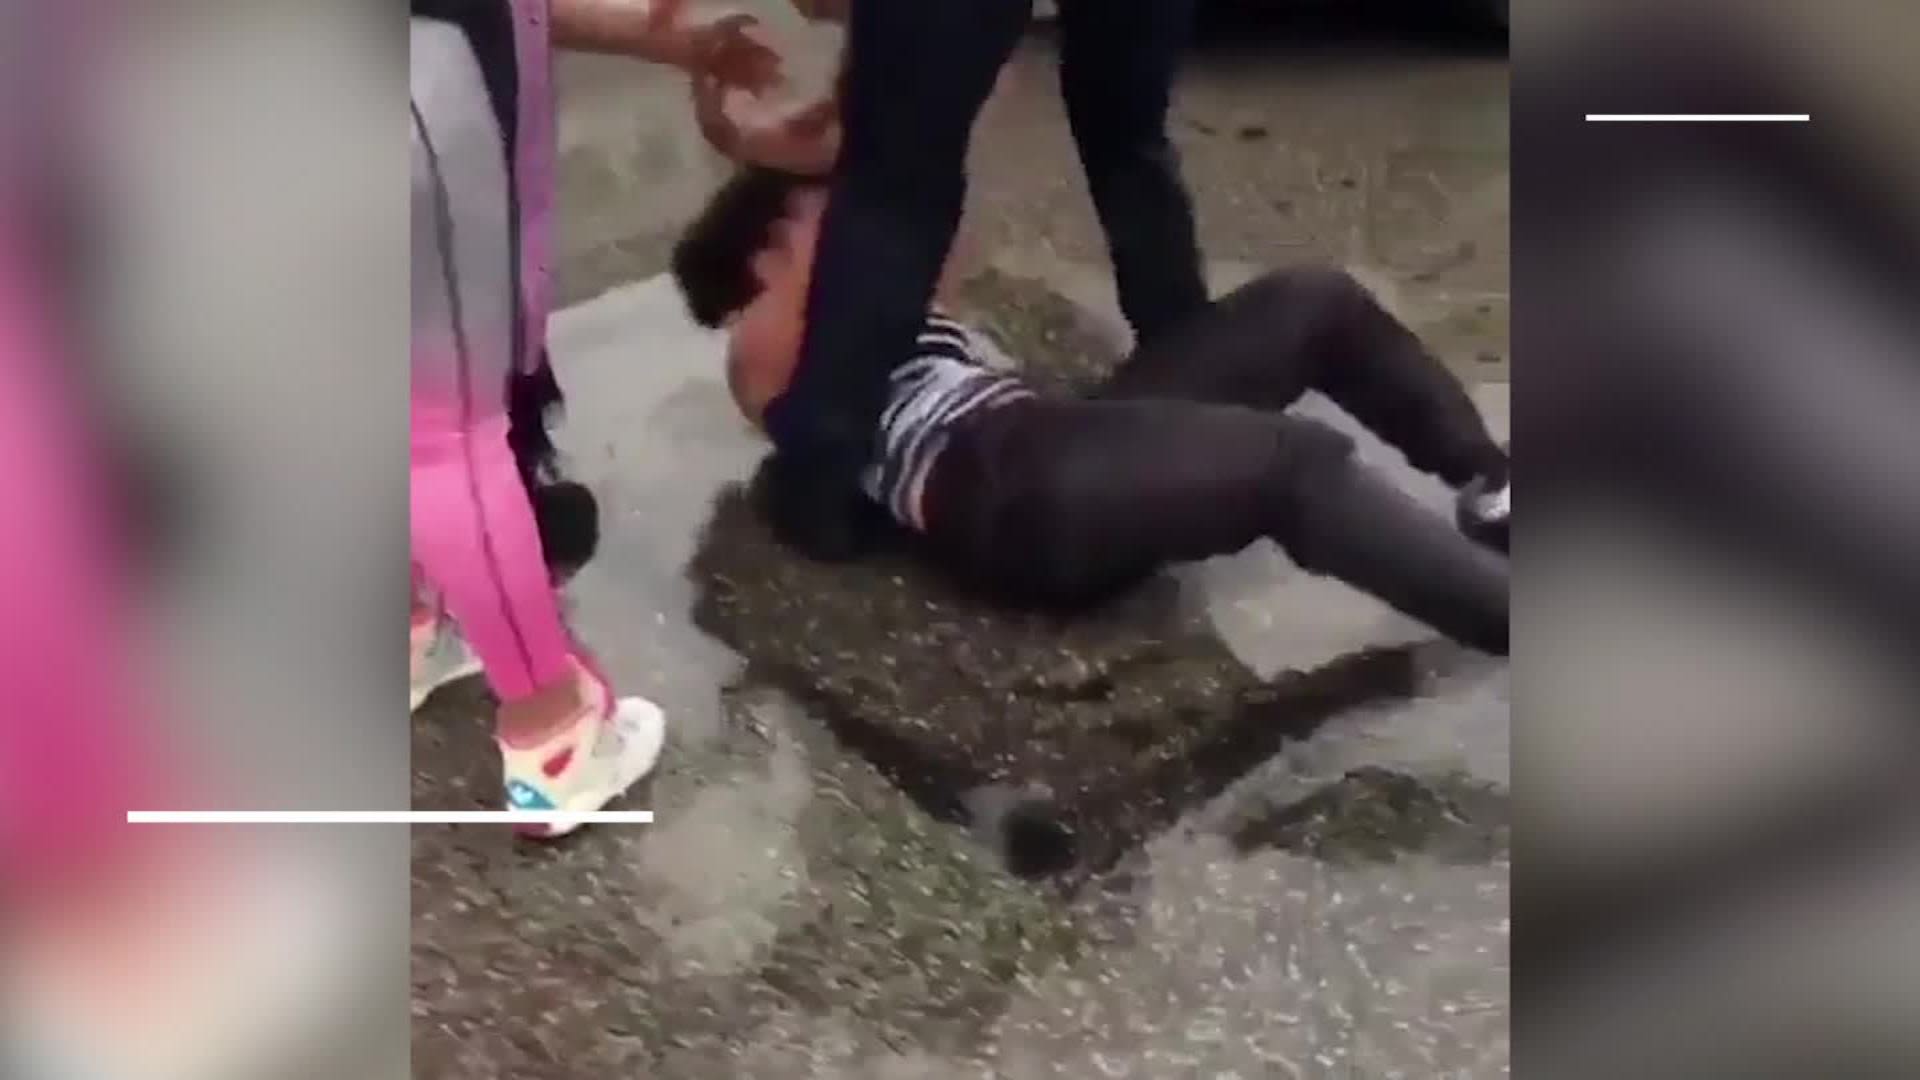 annette hamman share real girl street fights photos